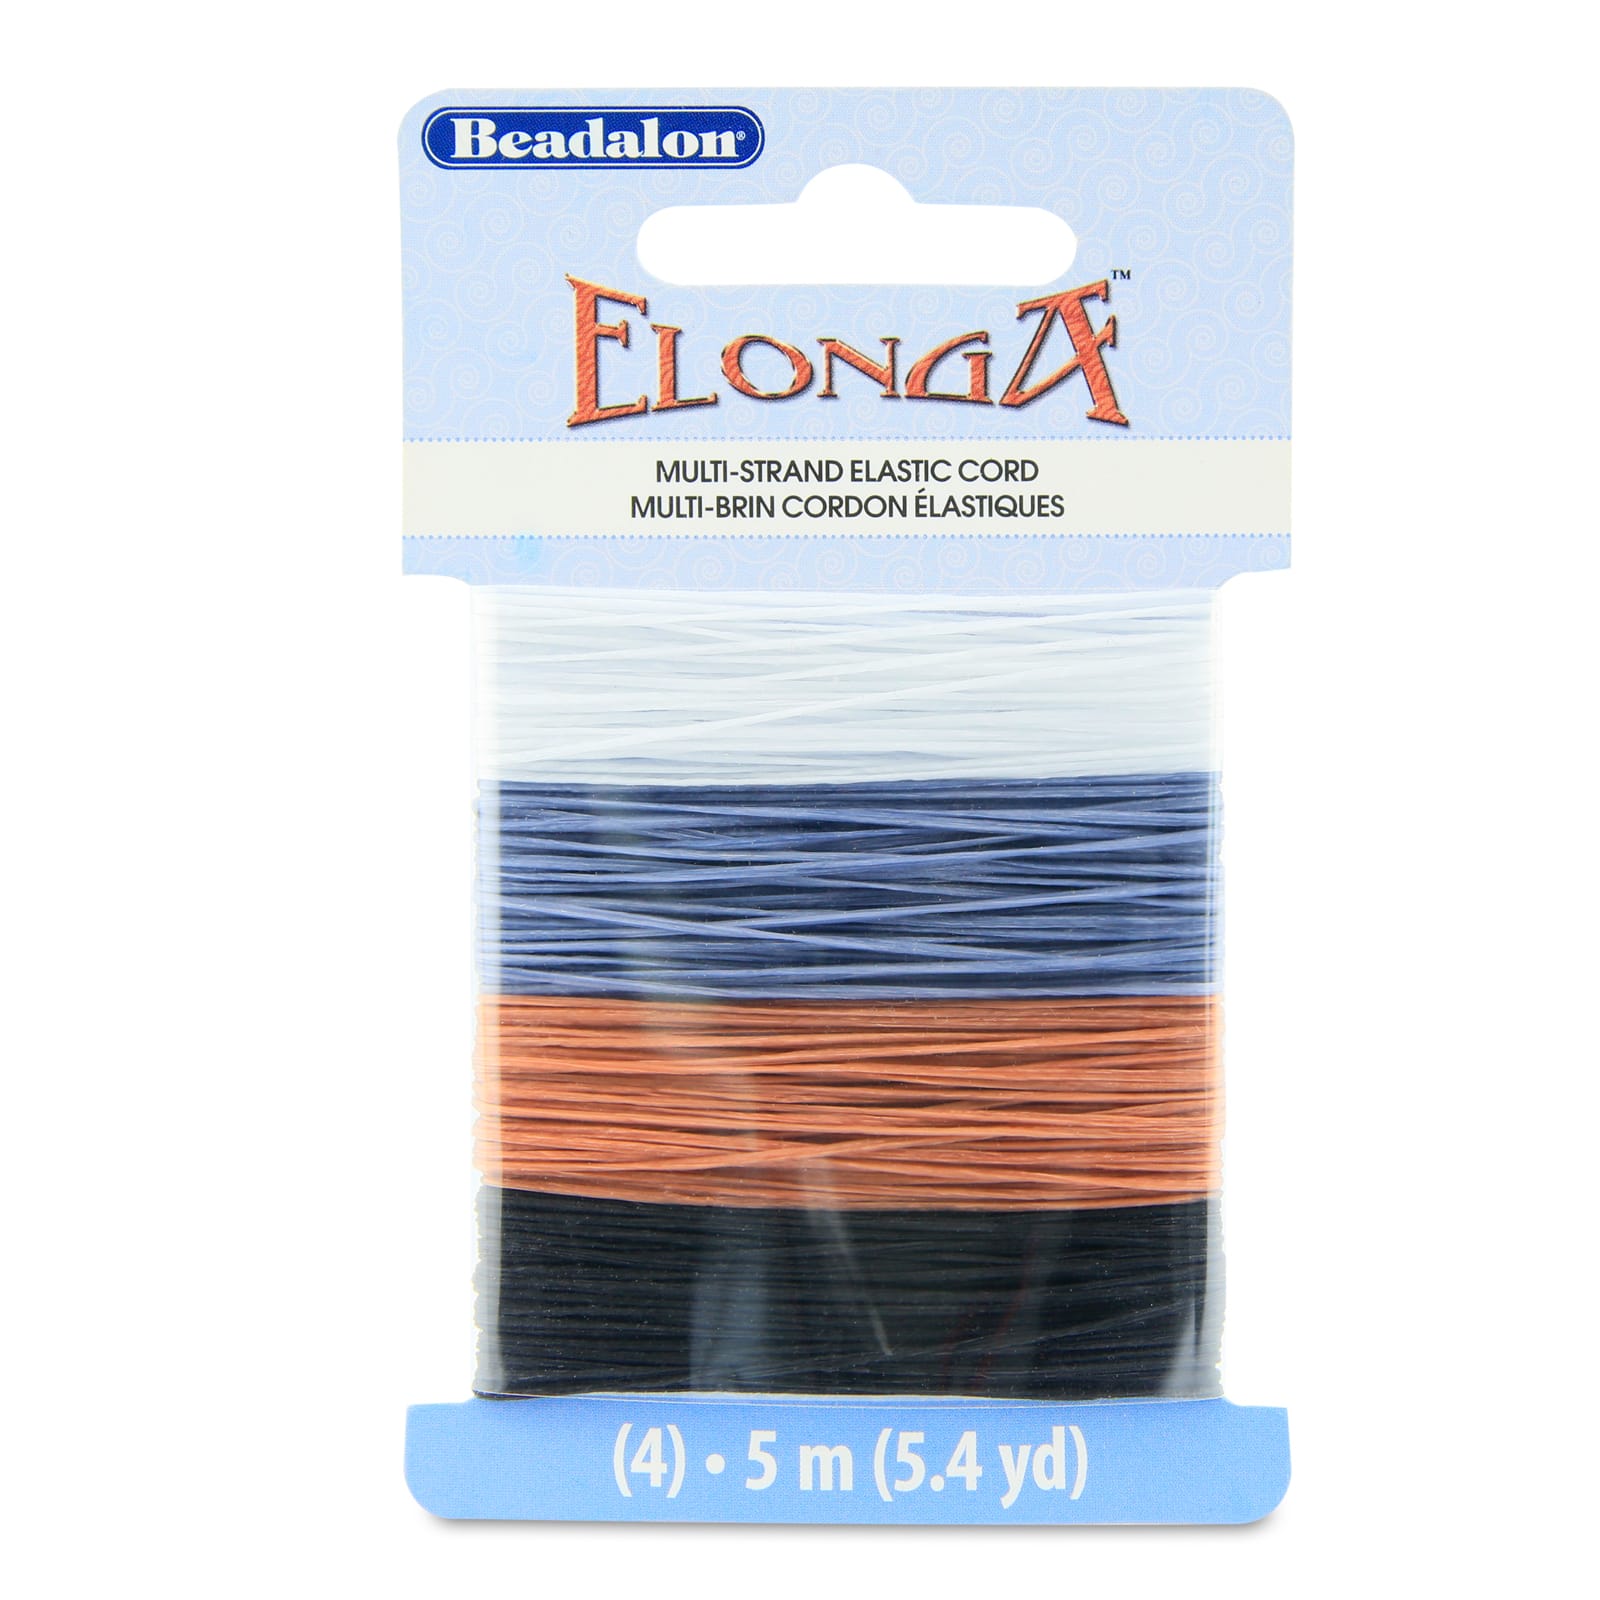 Beadalon® Elonga™ 0.7mm Colored Stretch Cord